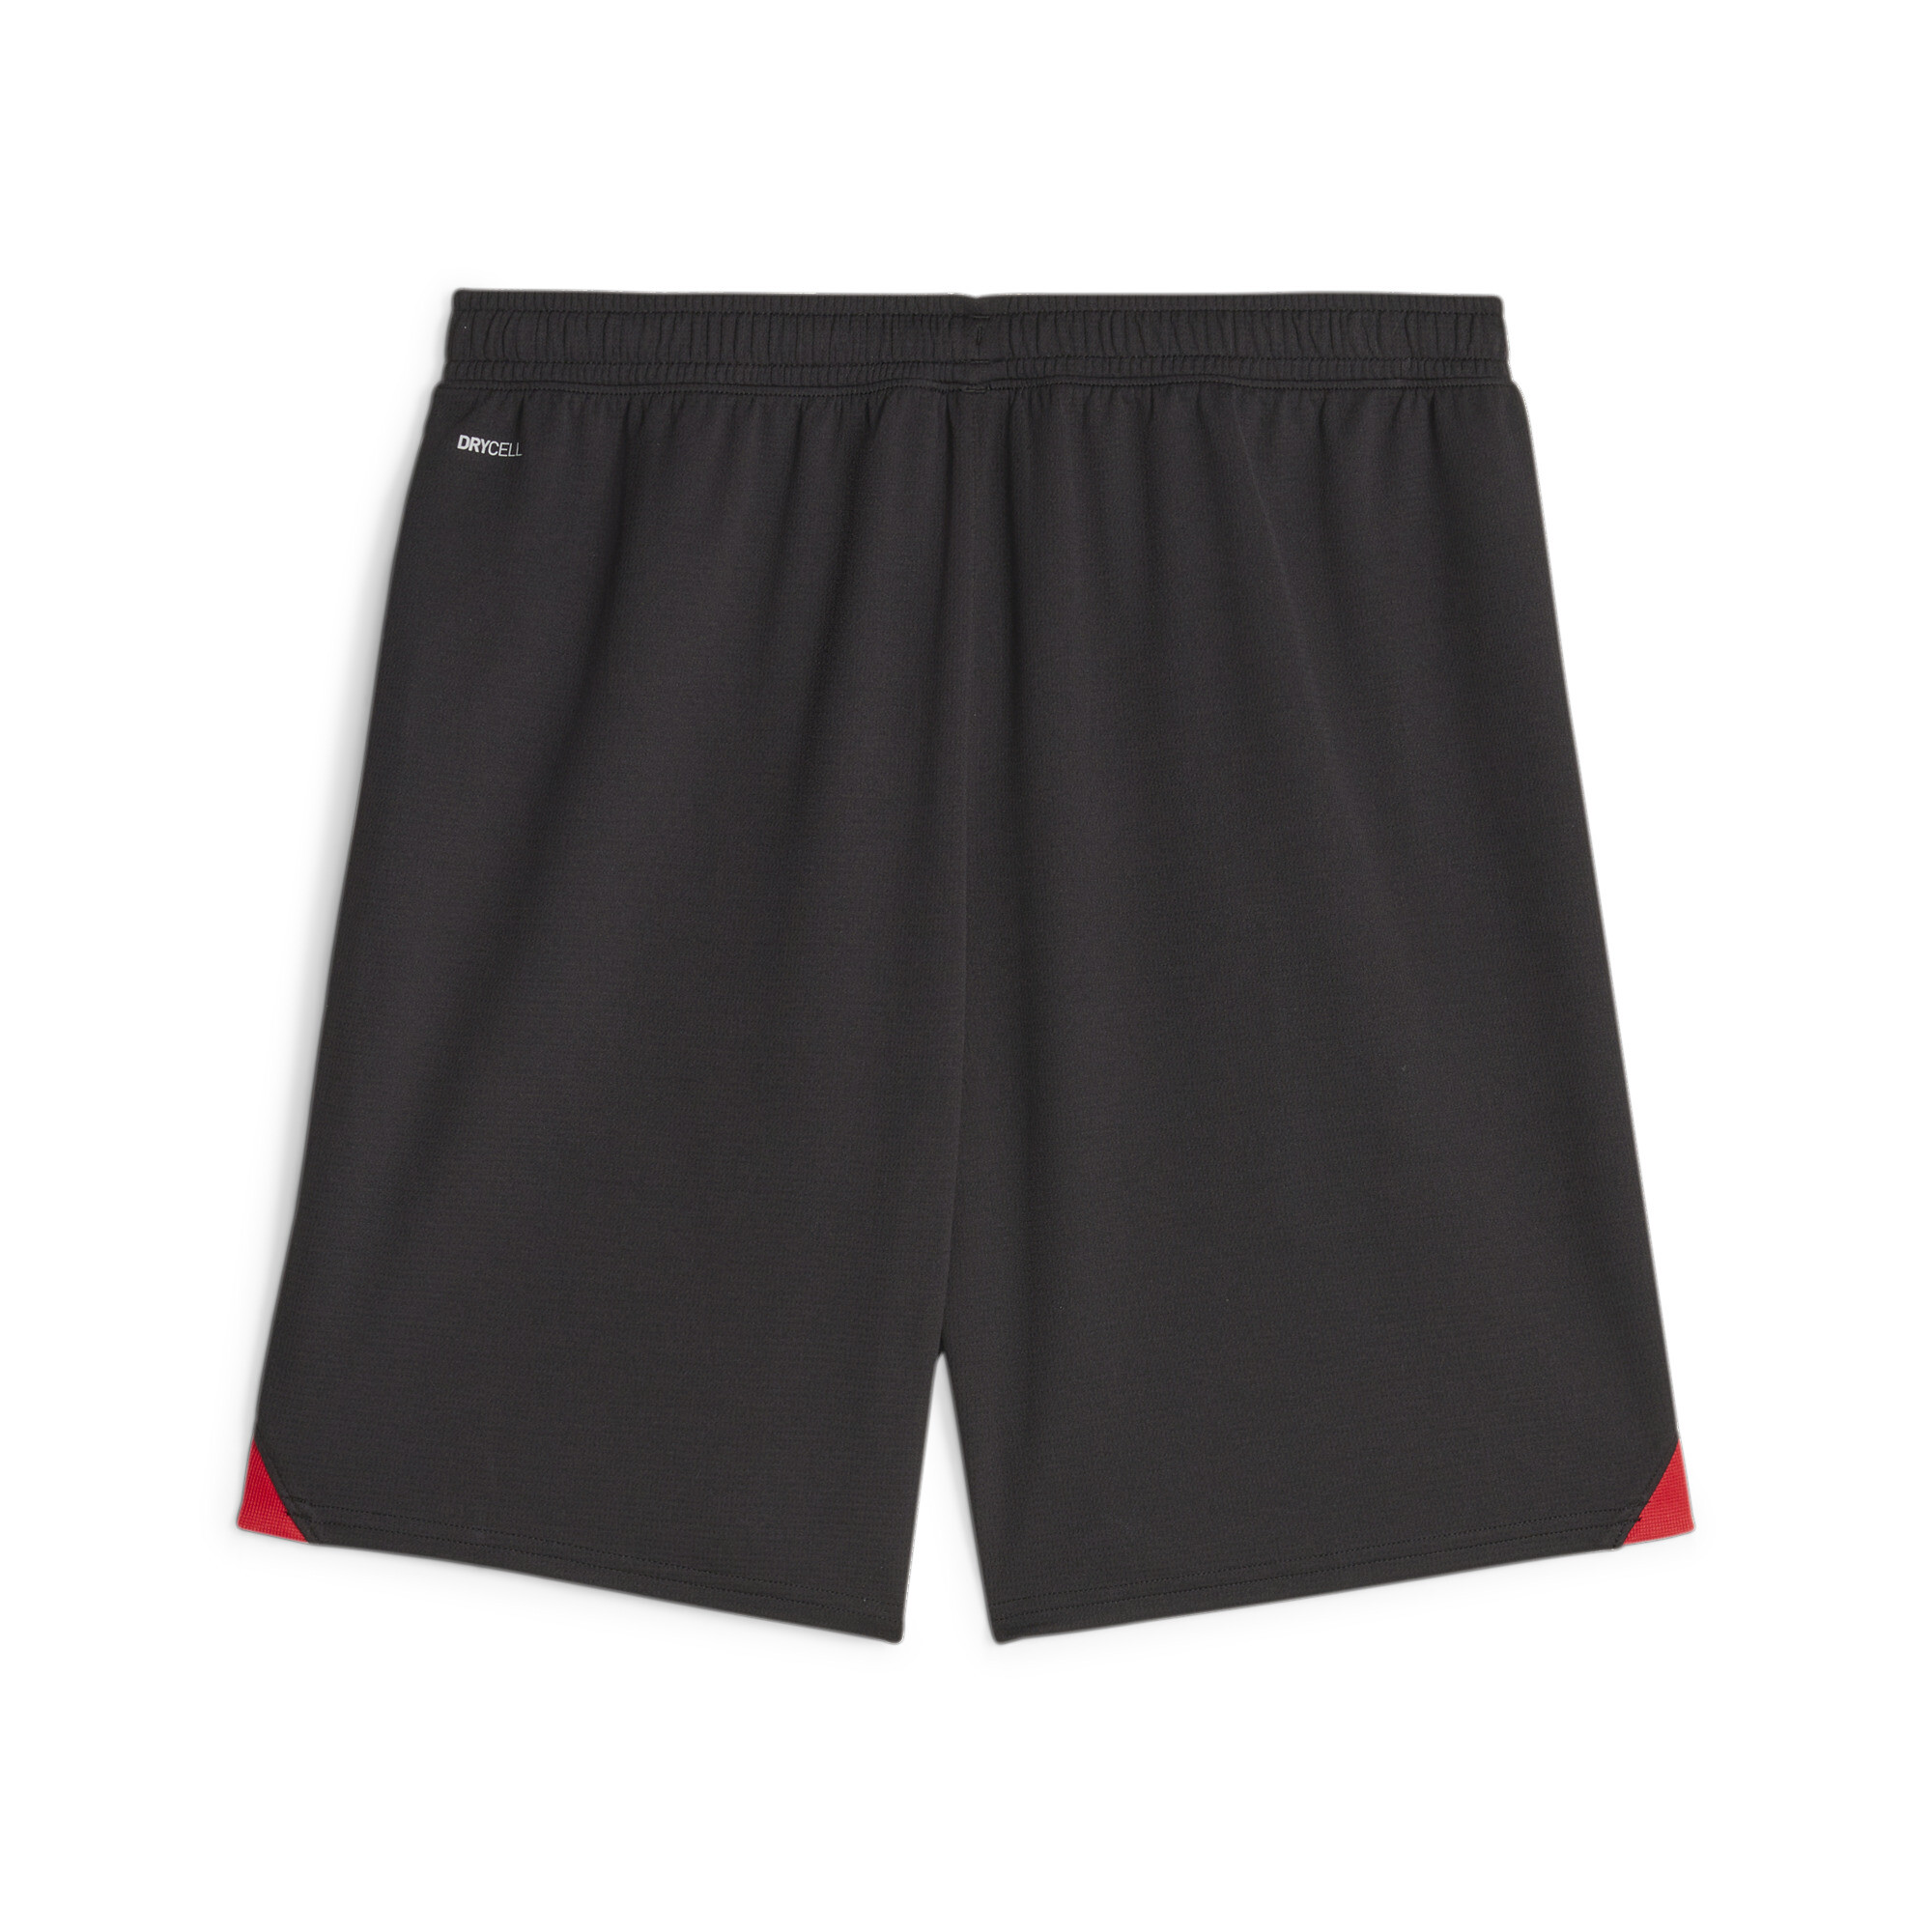 Men's PUMA AC Milan Football Shorts In Black, Size Medium